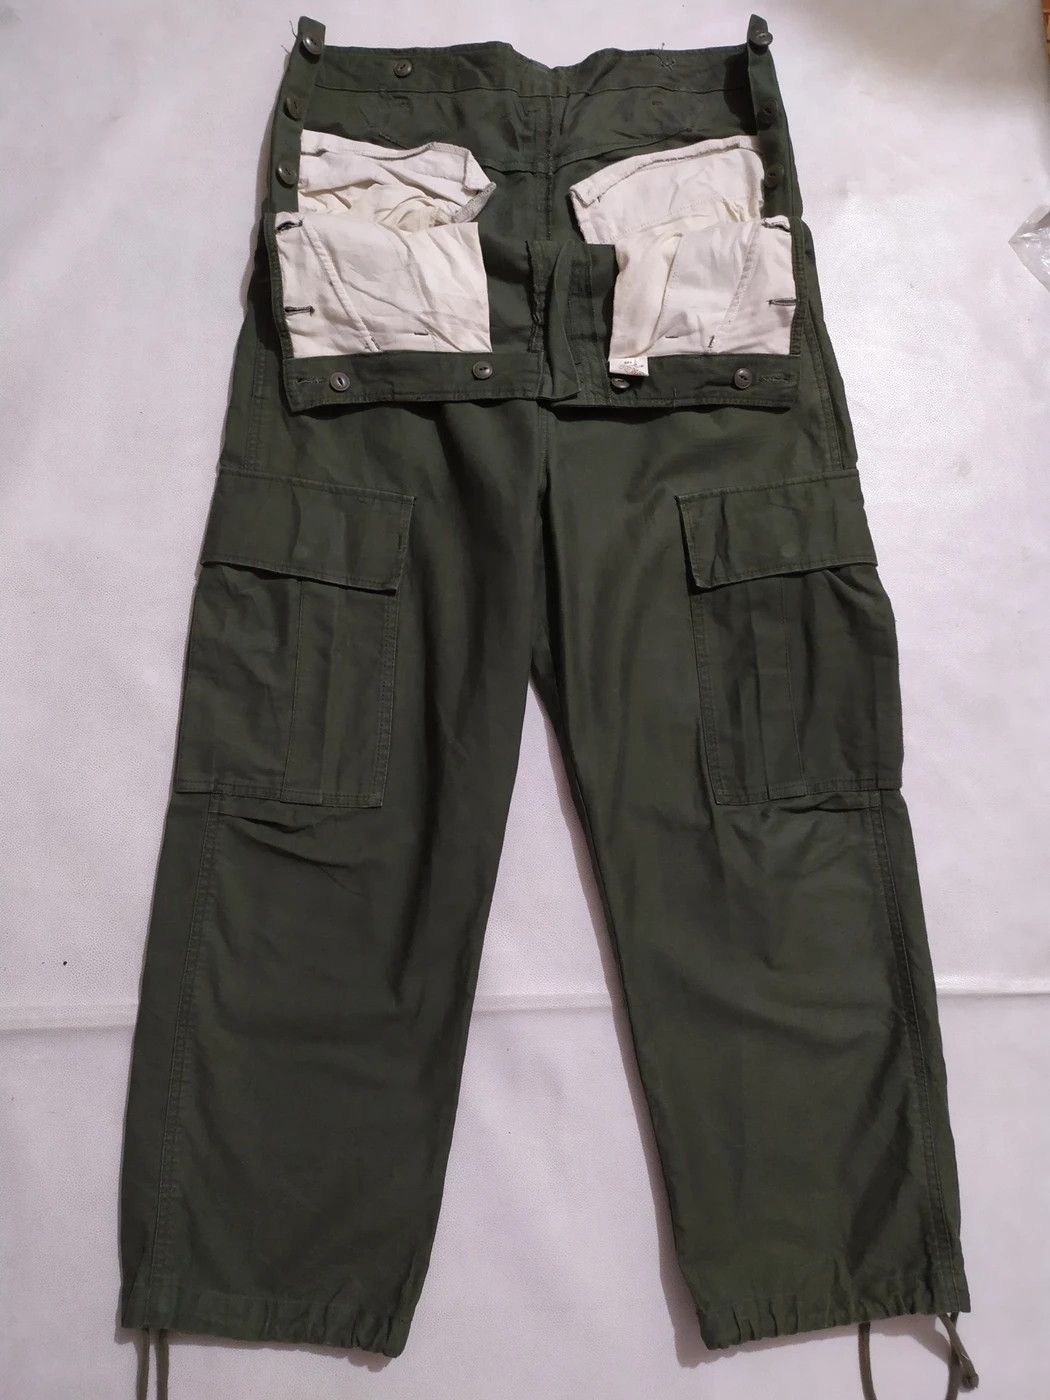 Japanese Brand Cargo Pants Size US 31 - 5 Thumbnail